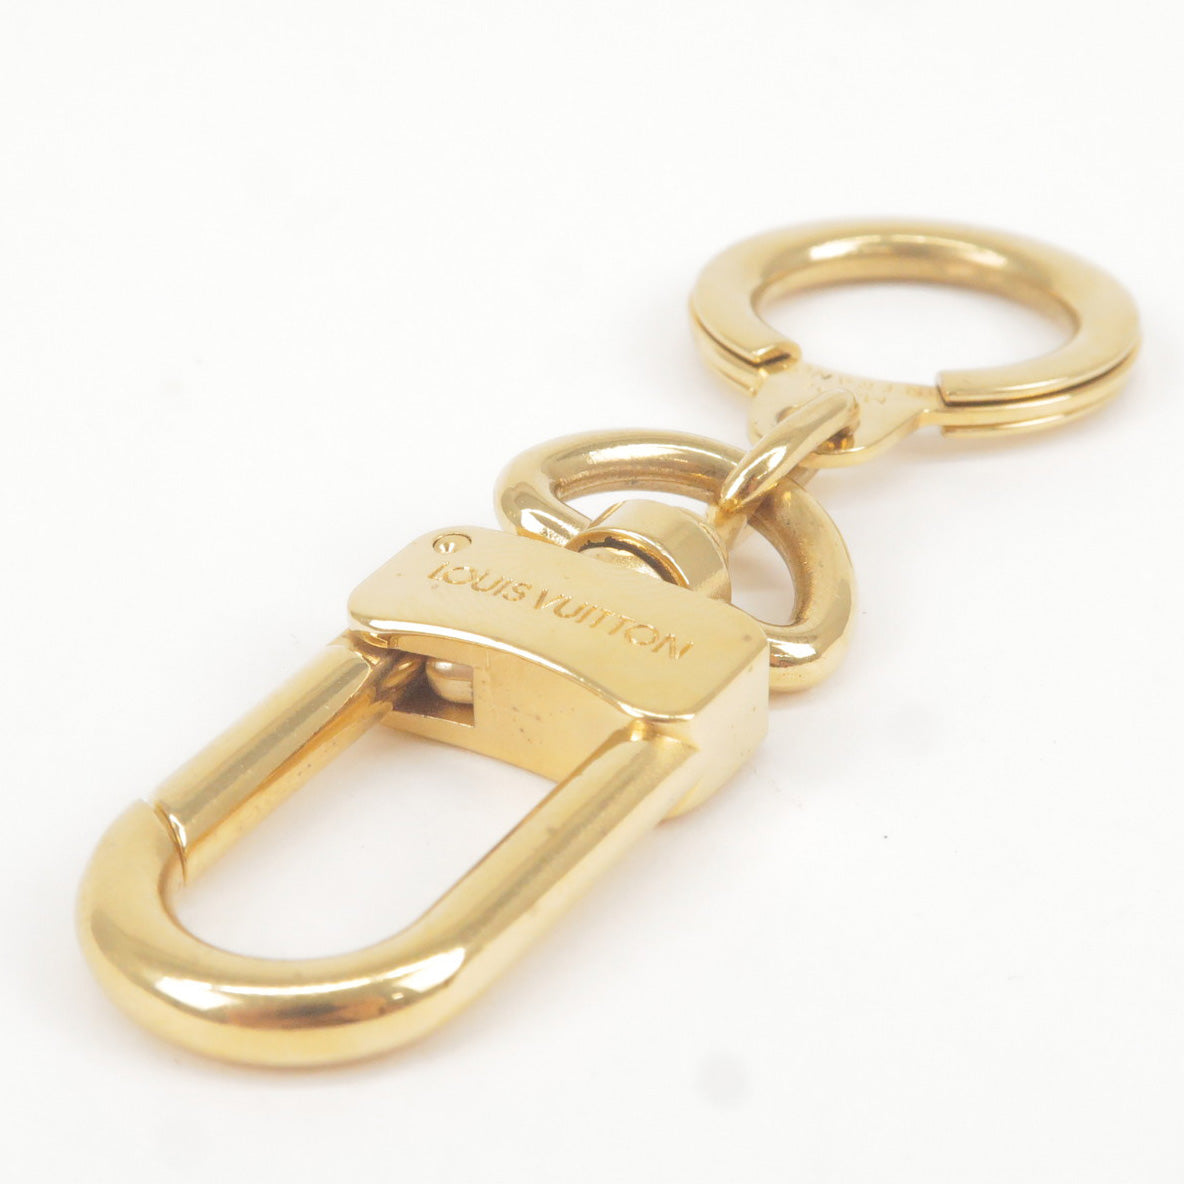 Louis-Vuitton-Ano-Cles-Key-Chain-Key-Charm-Gold-M62694 – dct